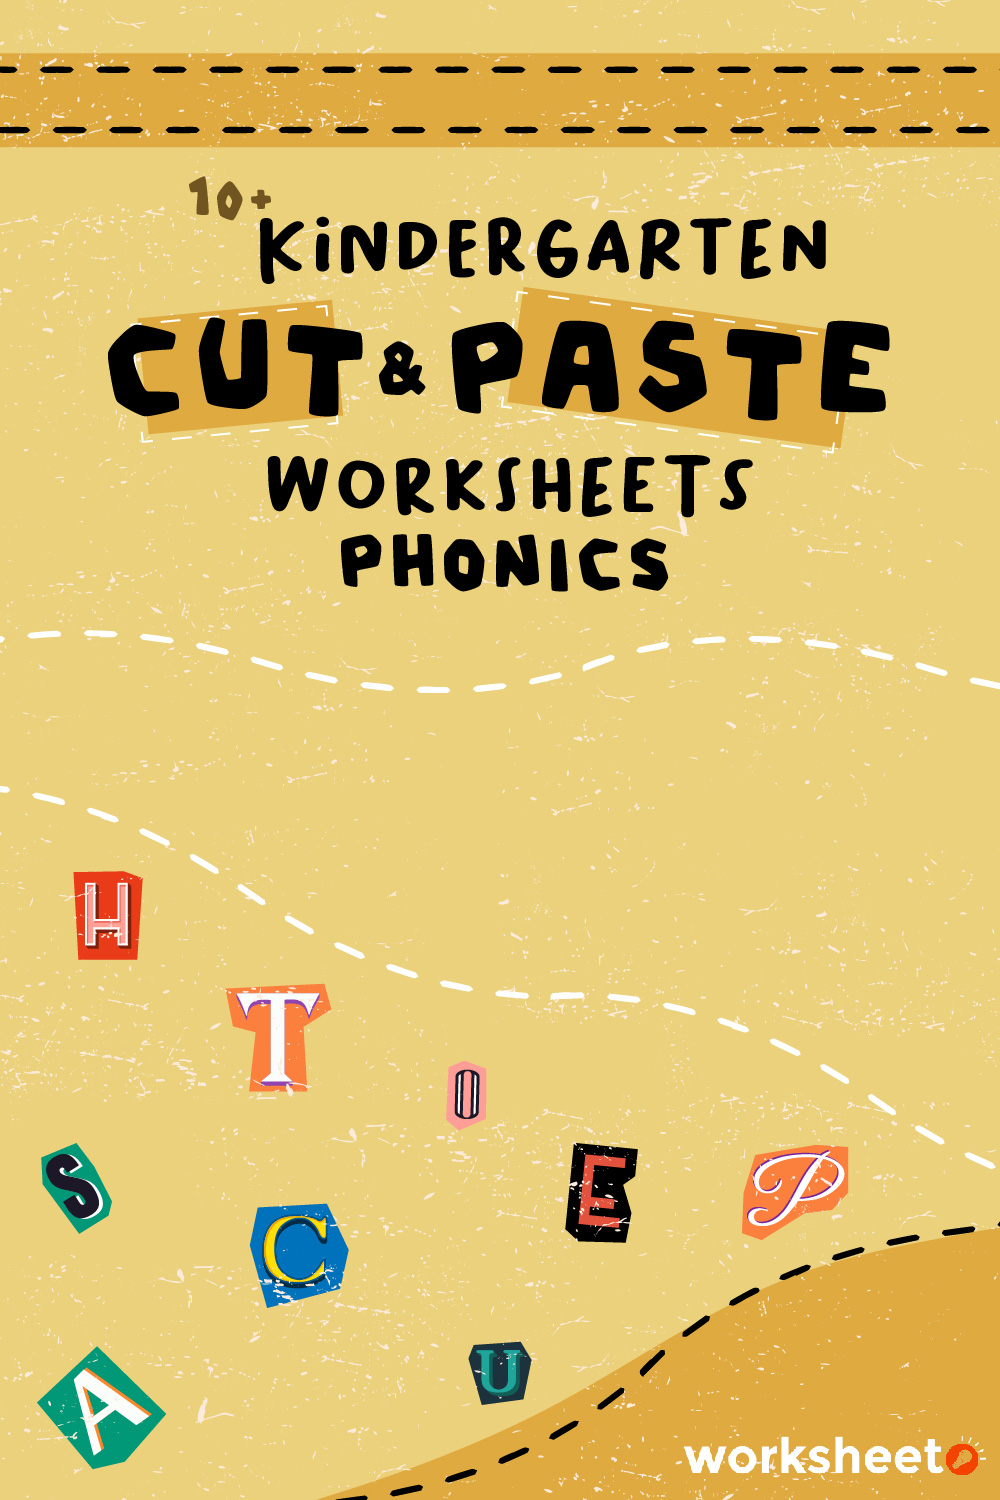 Kindergarten Cut and Paste Worksheets Phonics